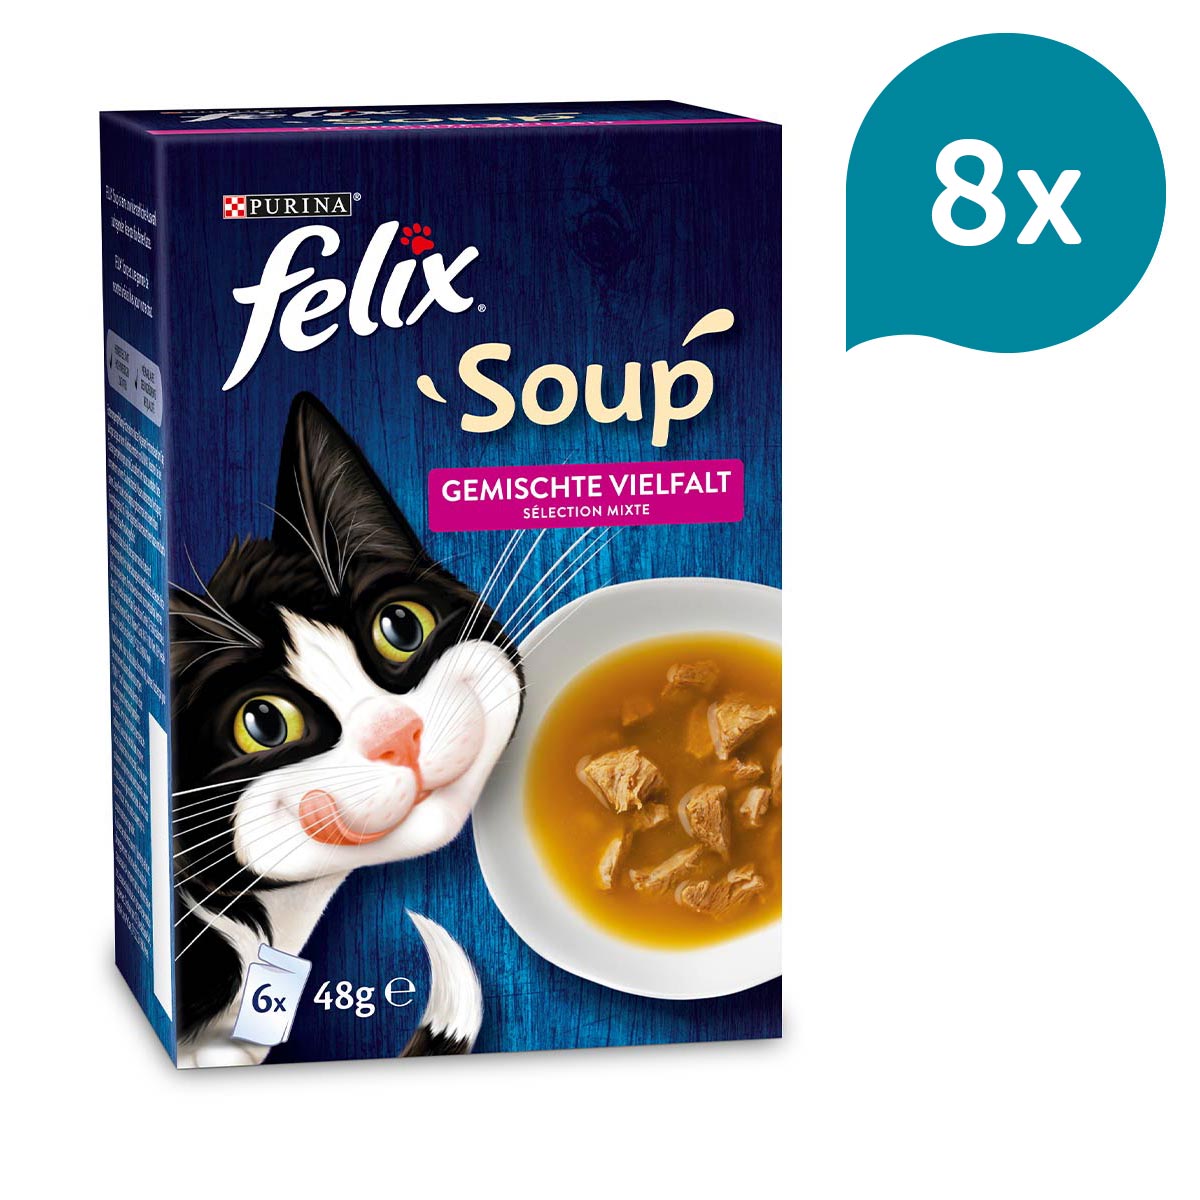 FELIX Soup Gesmischte Vielfalt mit Rind